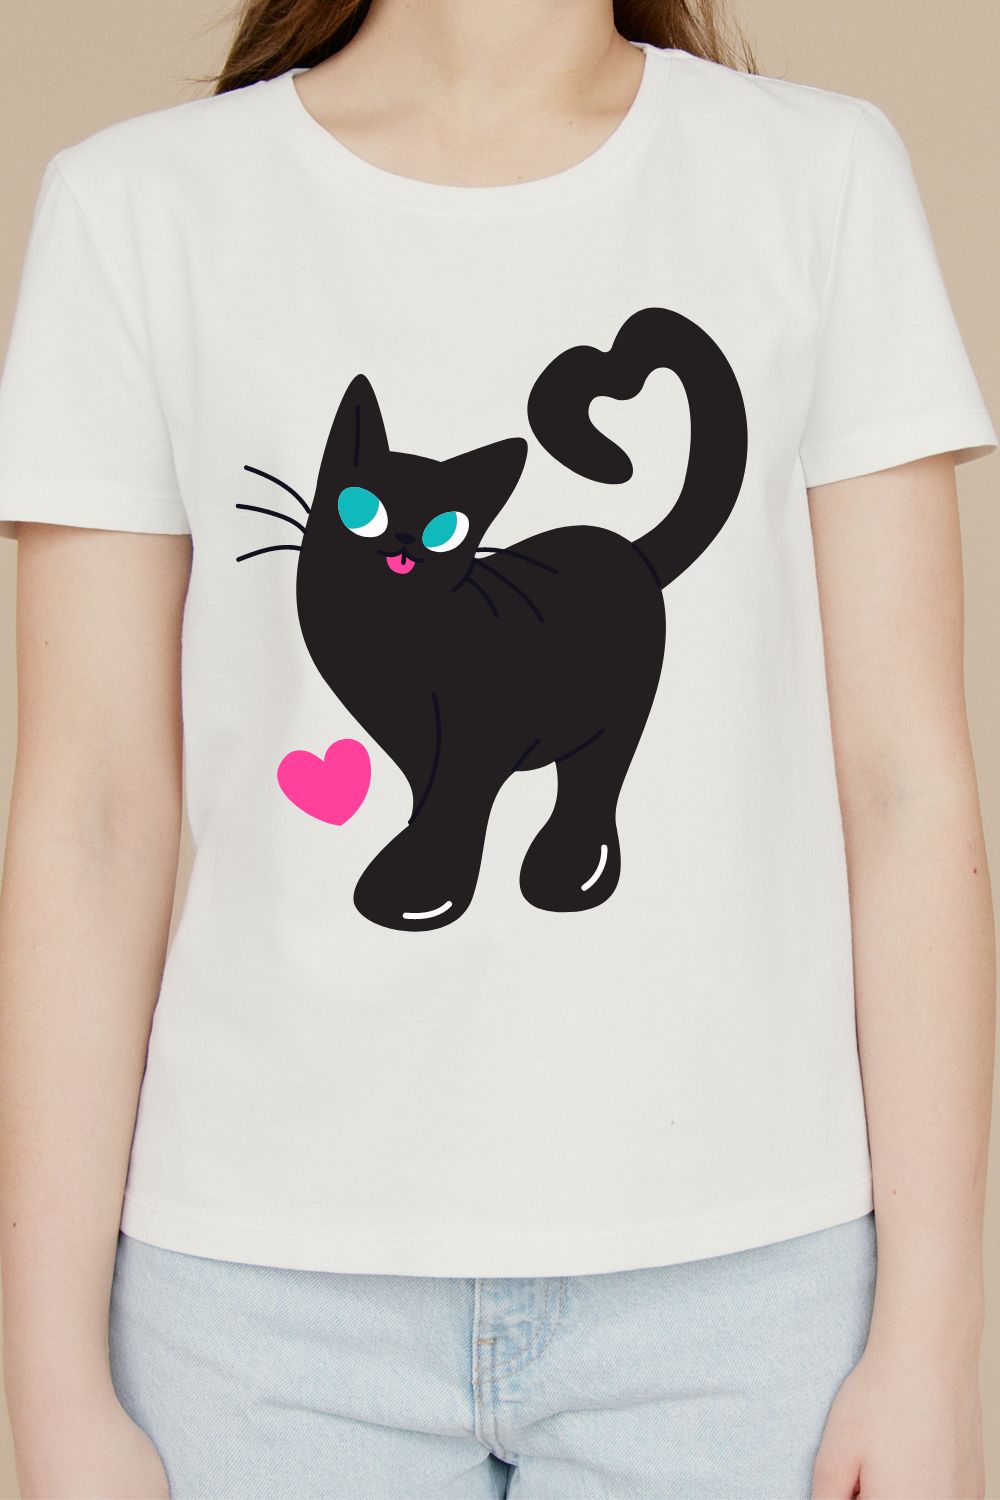 Cute cat T Shirt Design pinterest preview image.